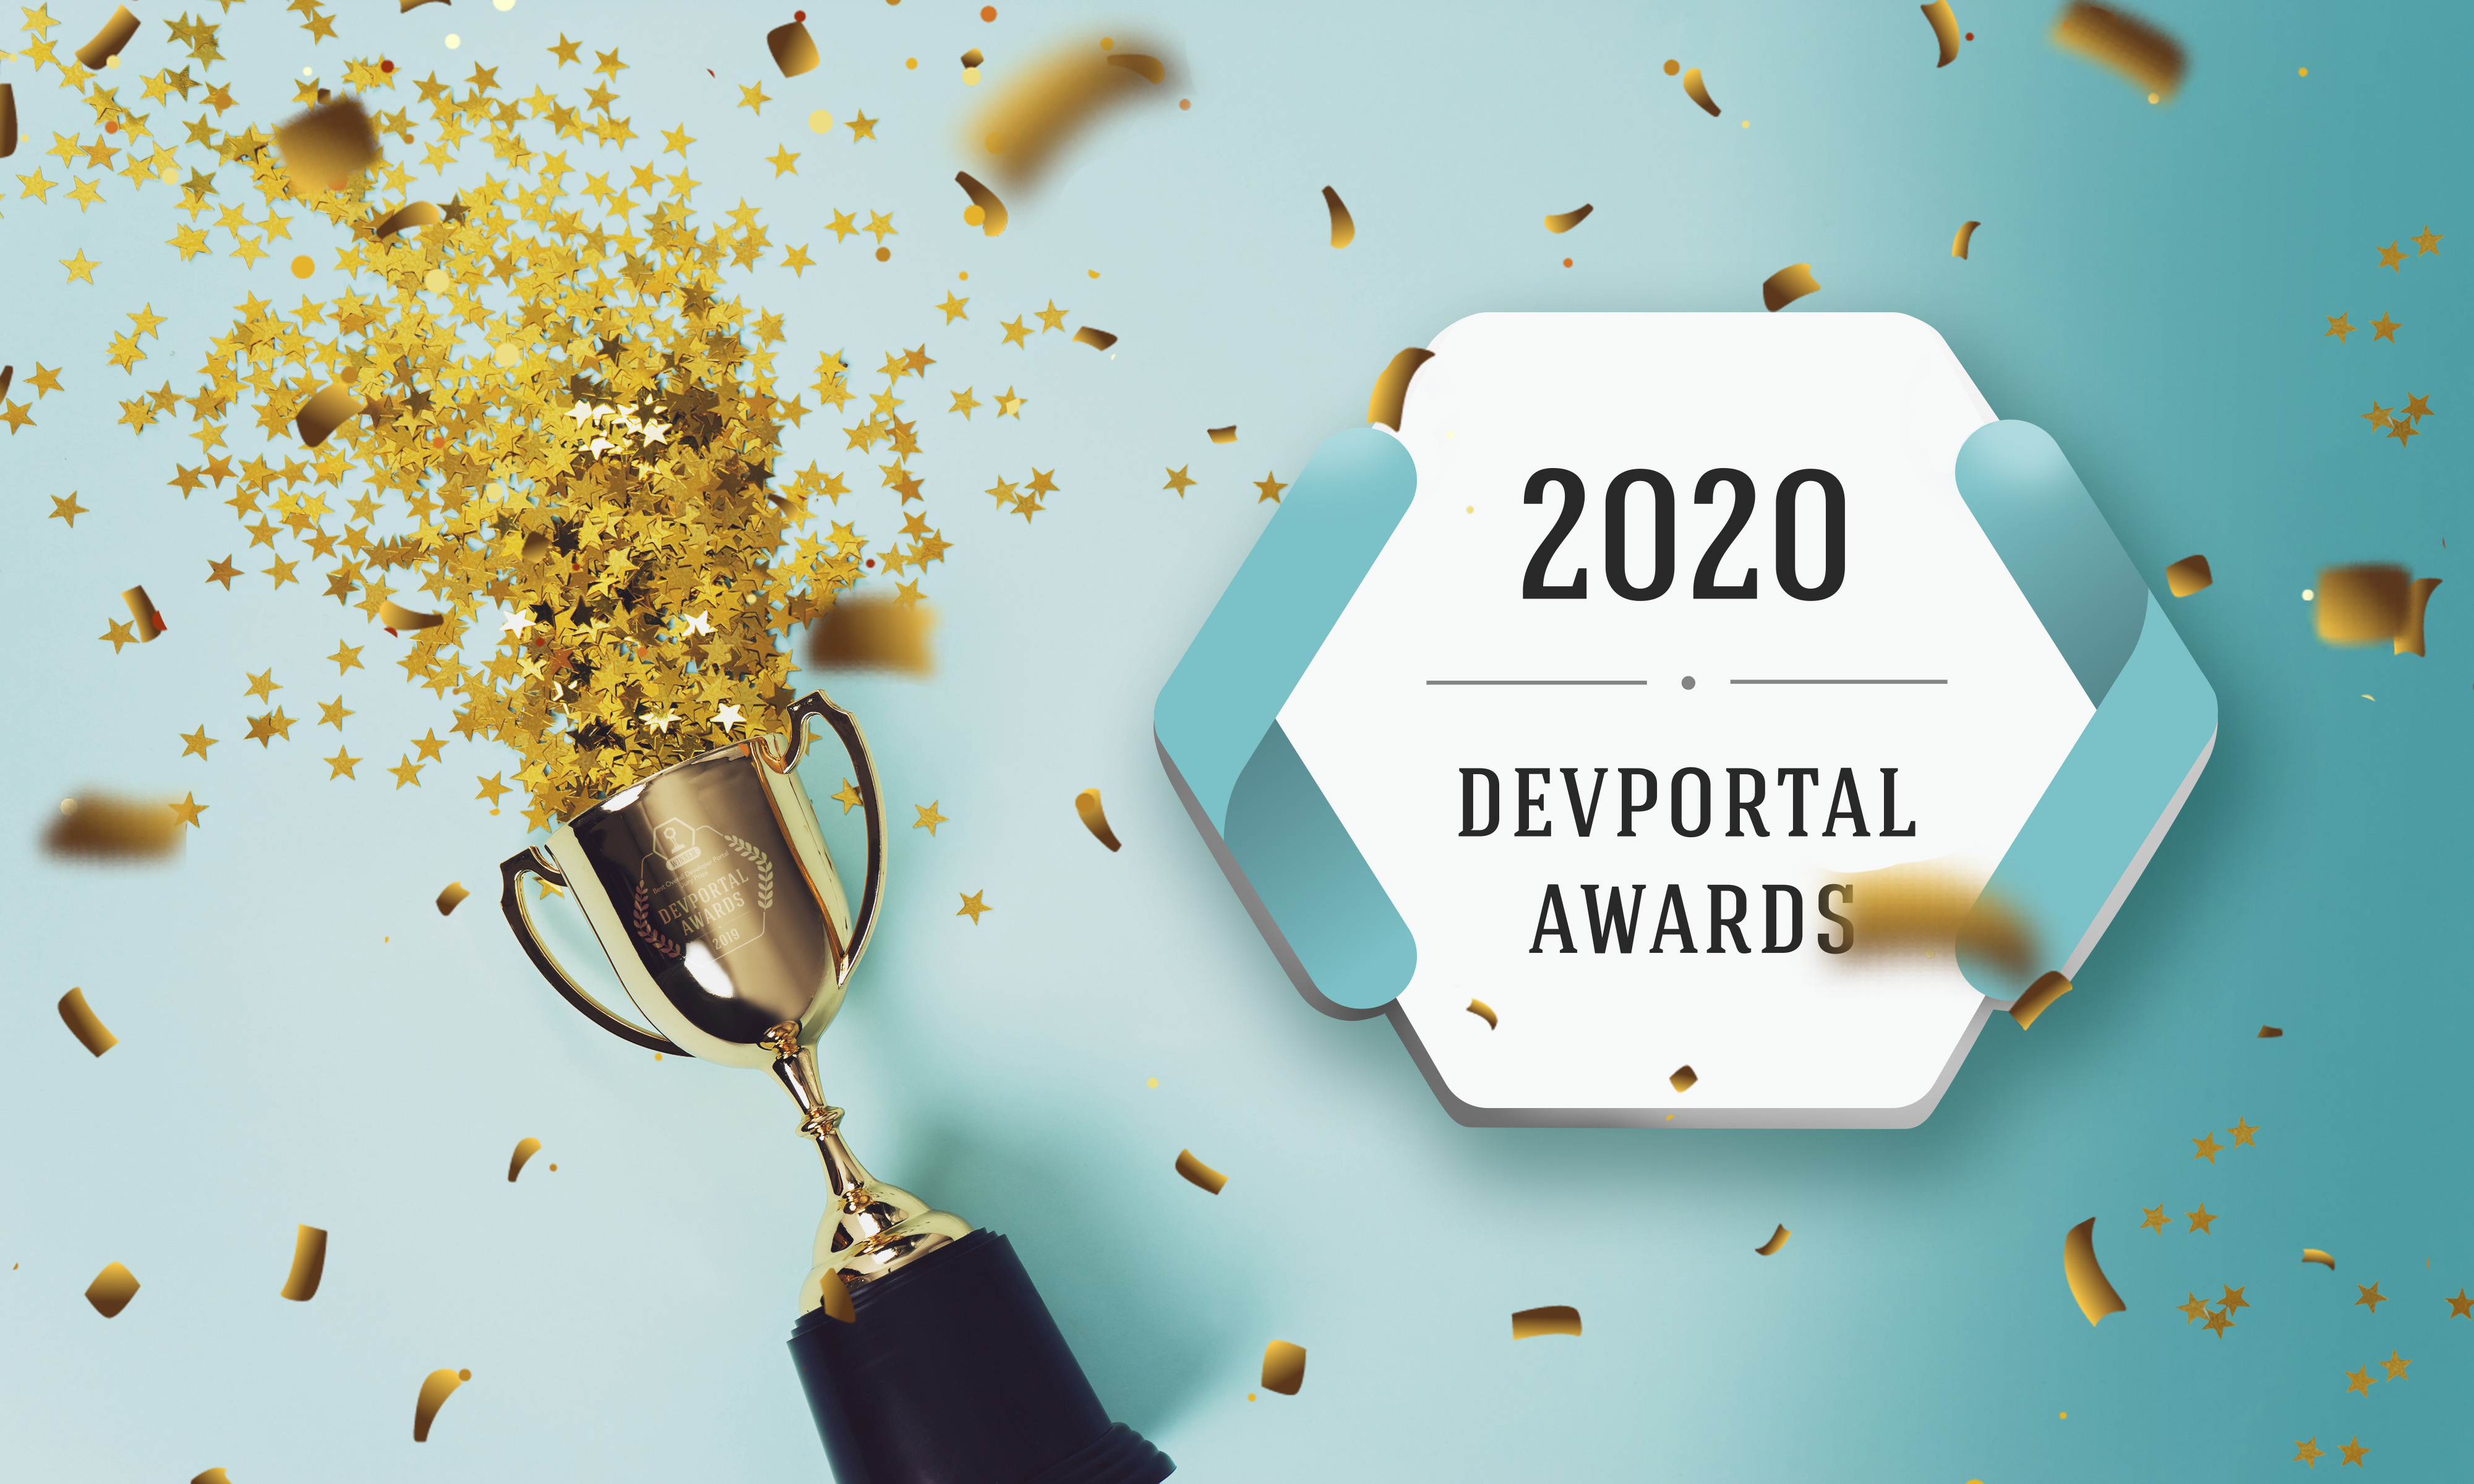 devportal awards 2020 image